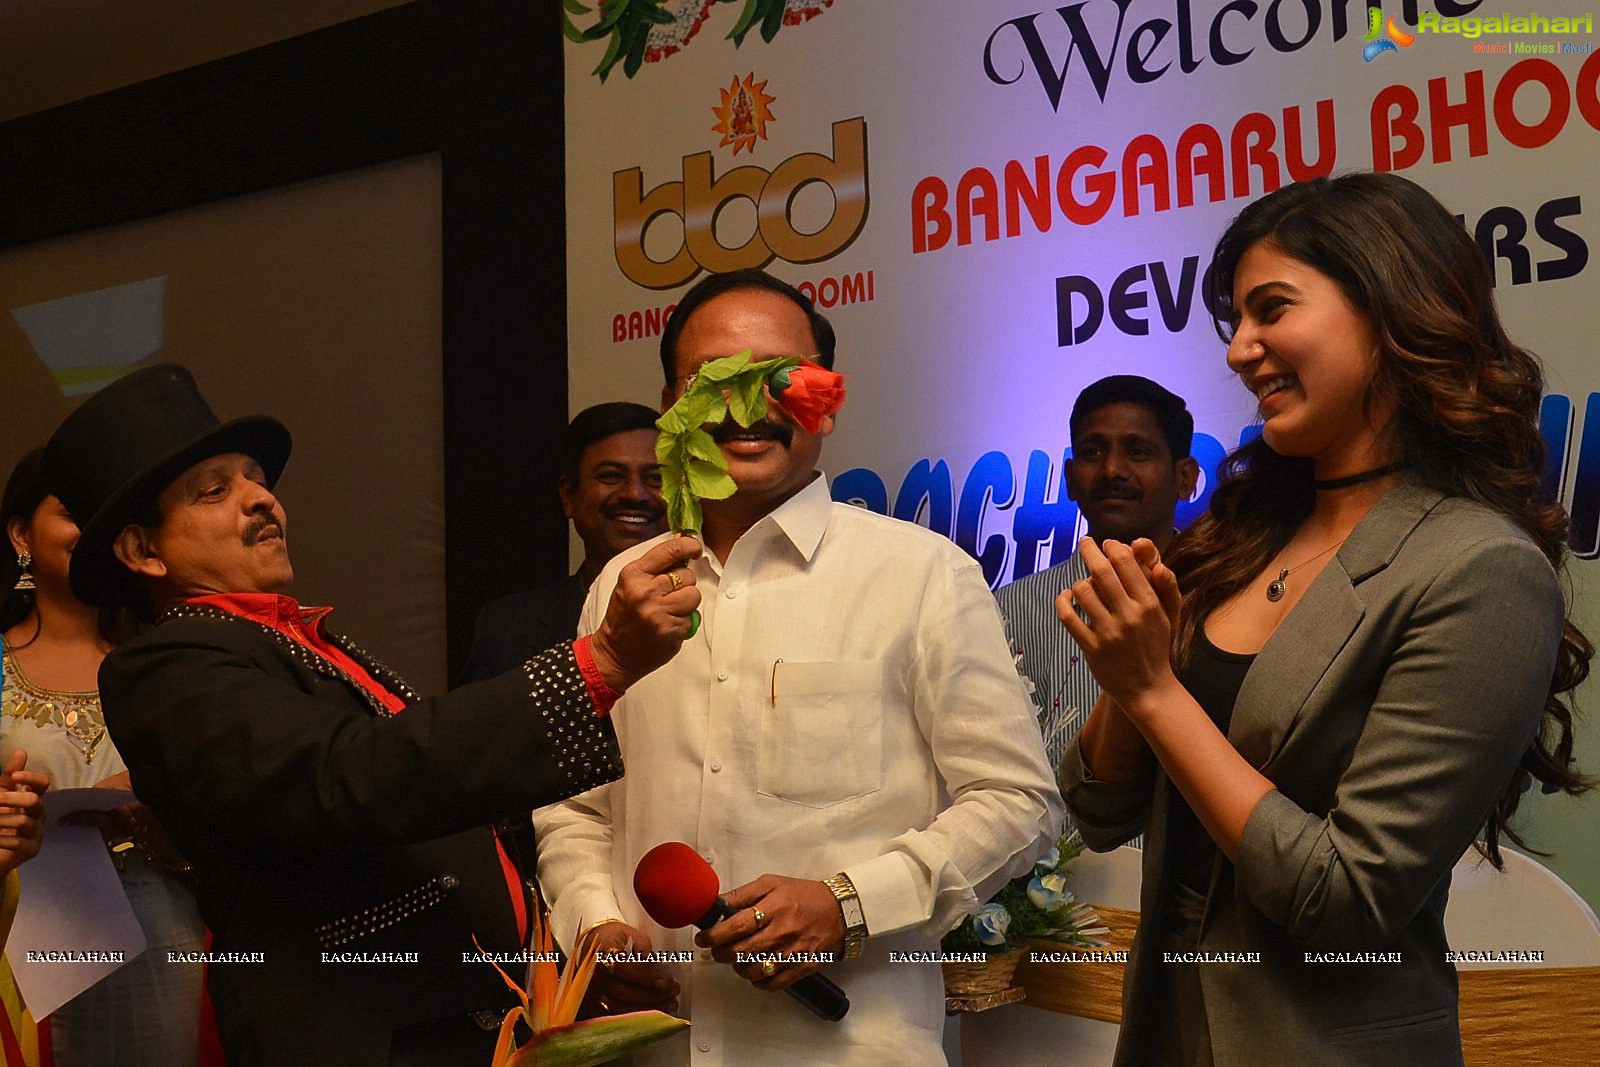 Samantha launches Bangaaru Bhoomi Developers Brochure in Hyderabad